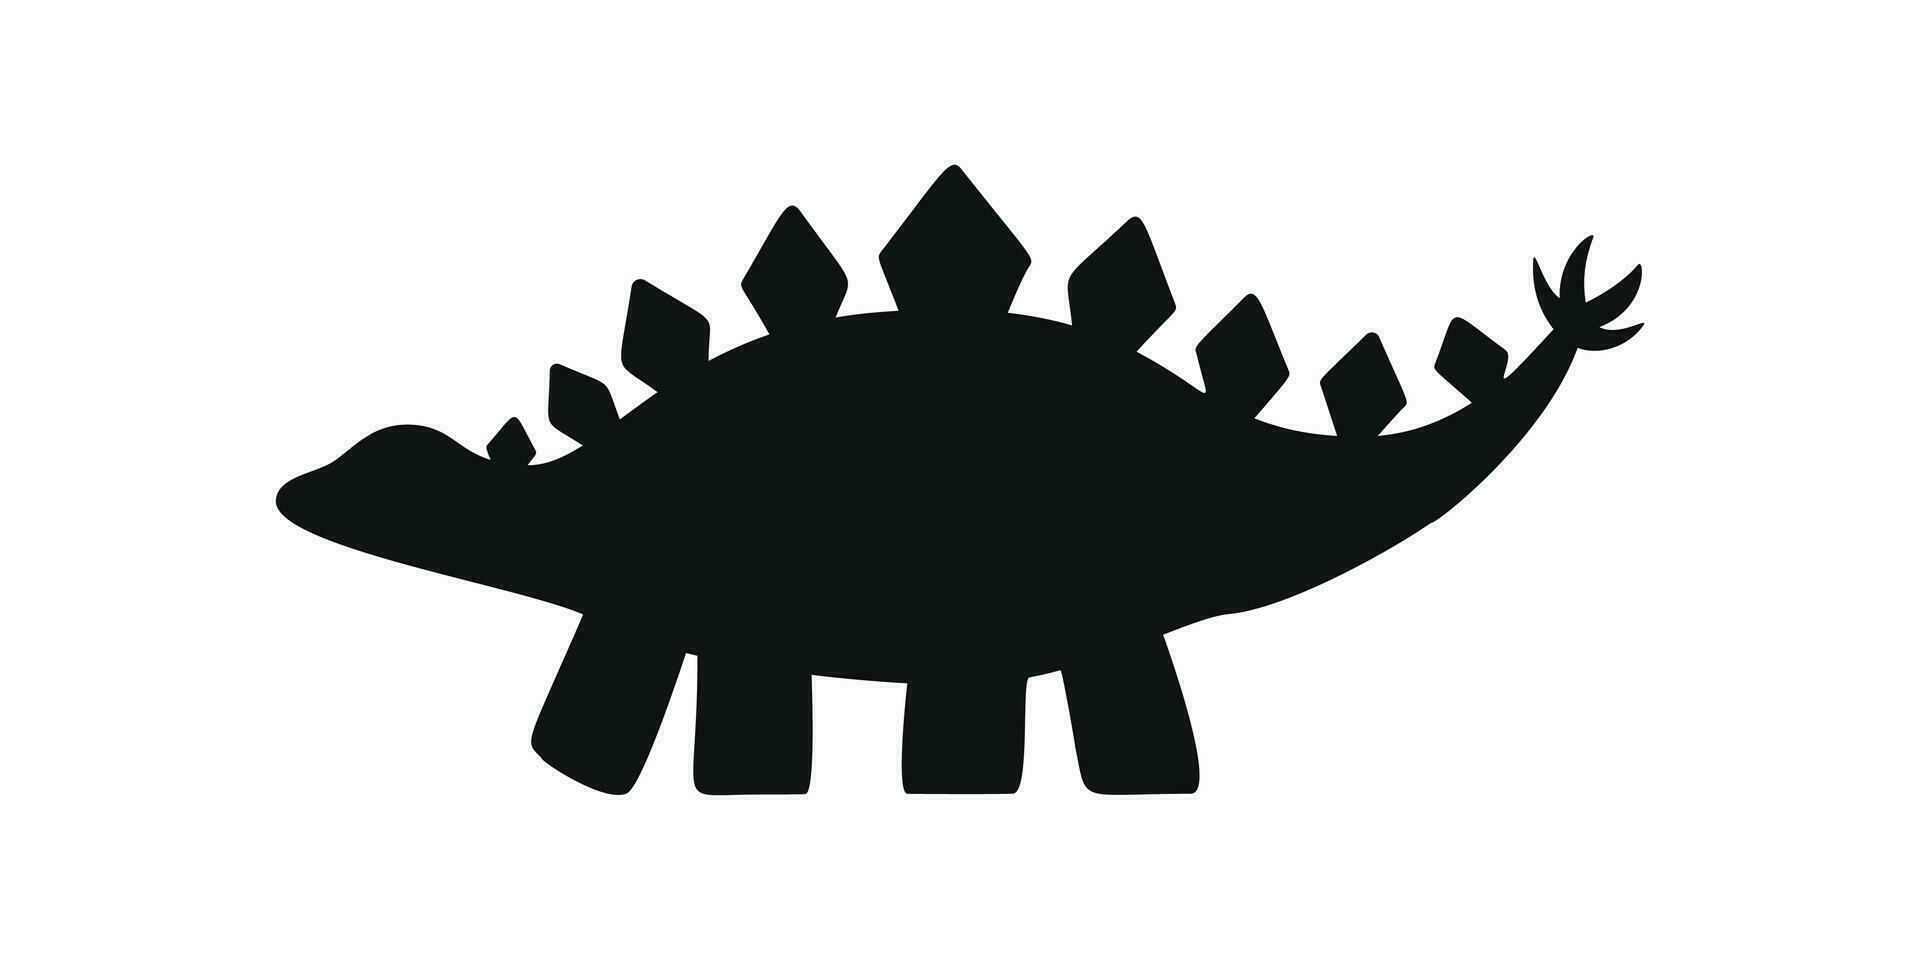 Flat vector silhouette illustration of stegosaurus dinosaur